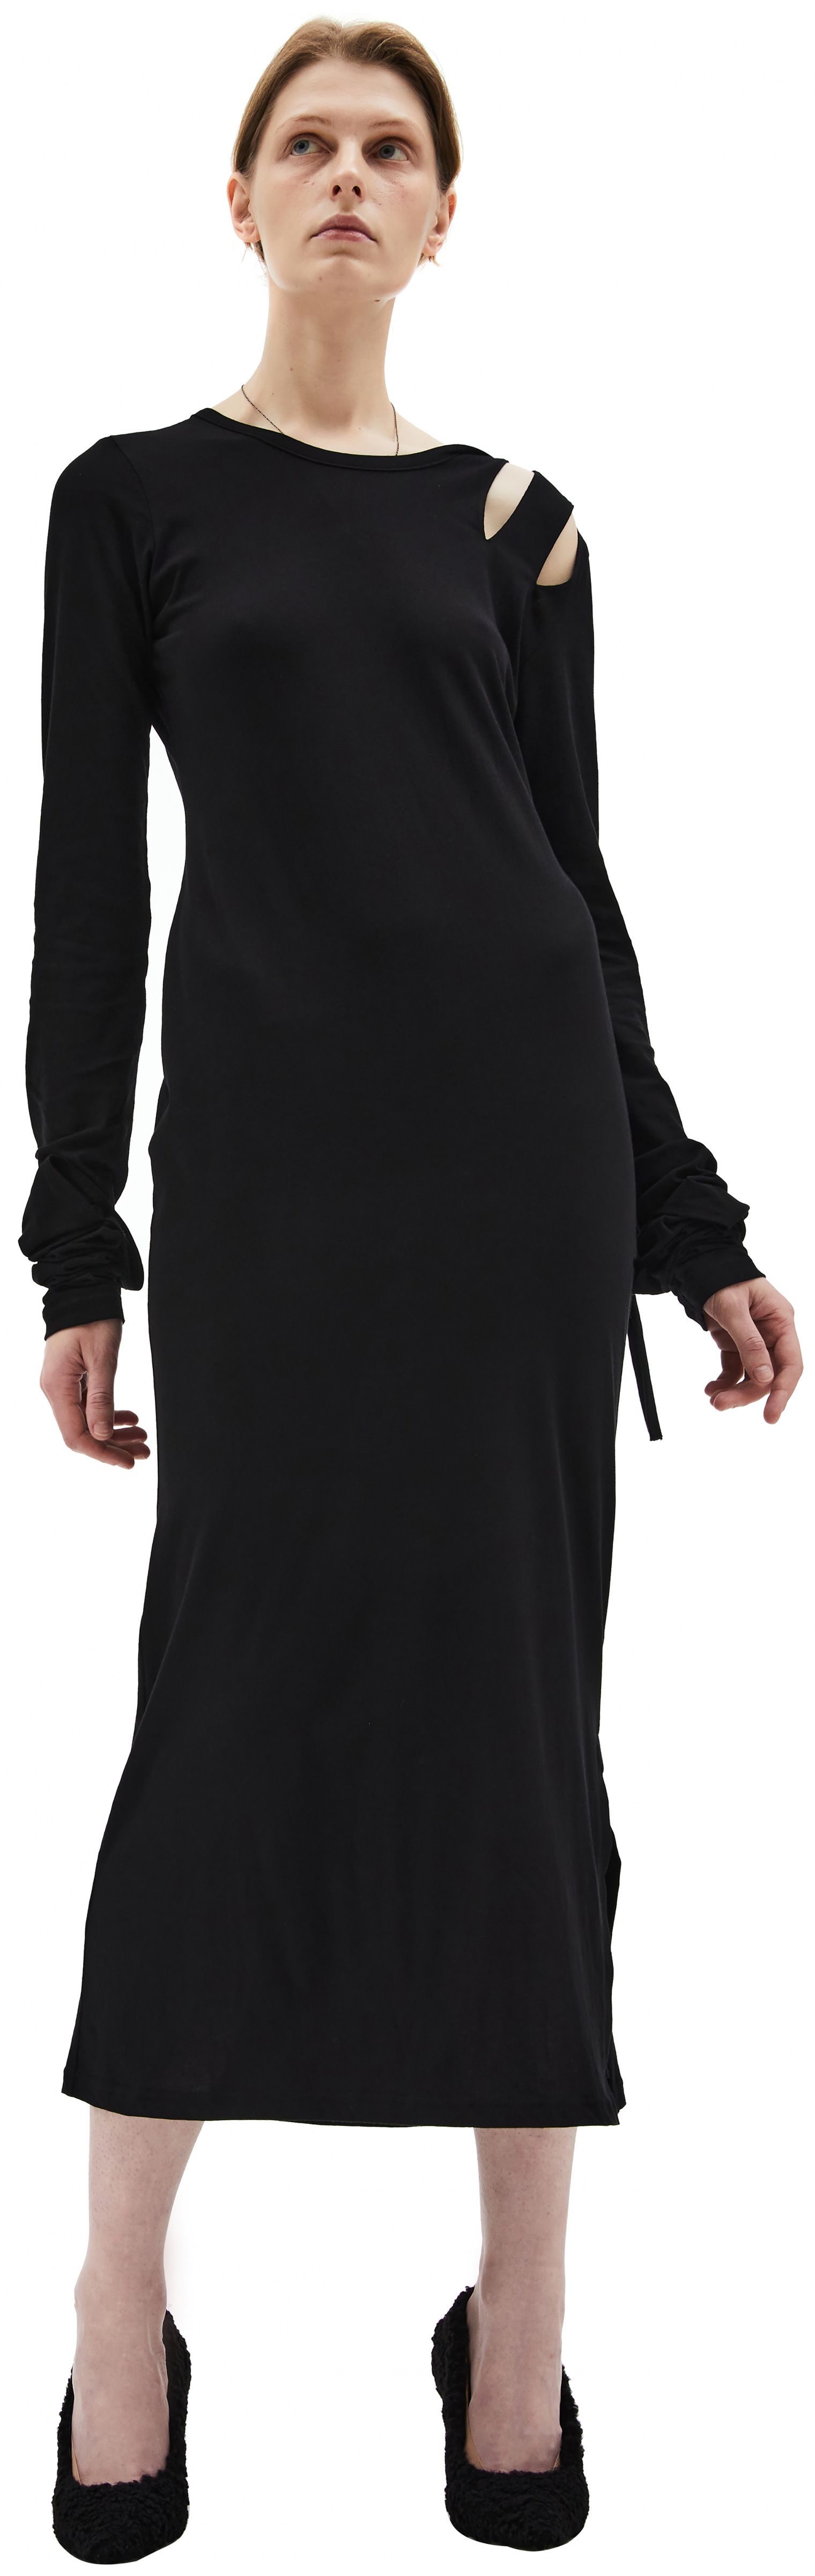 Yohji Yamamoto Cotton black dress with ties